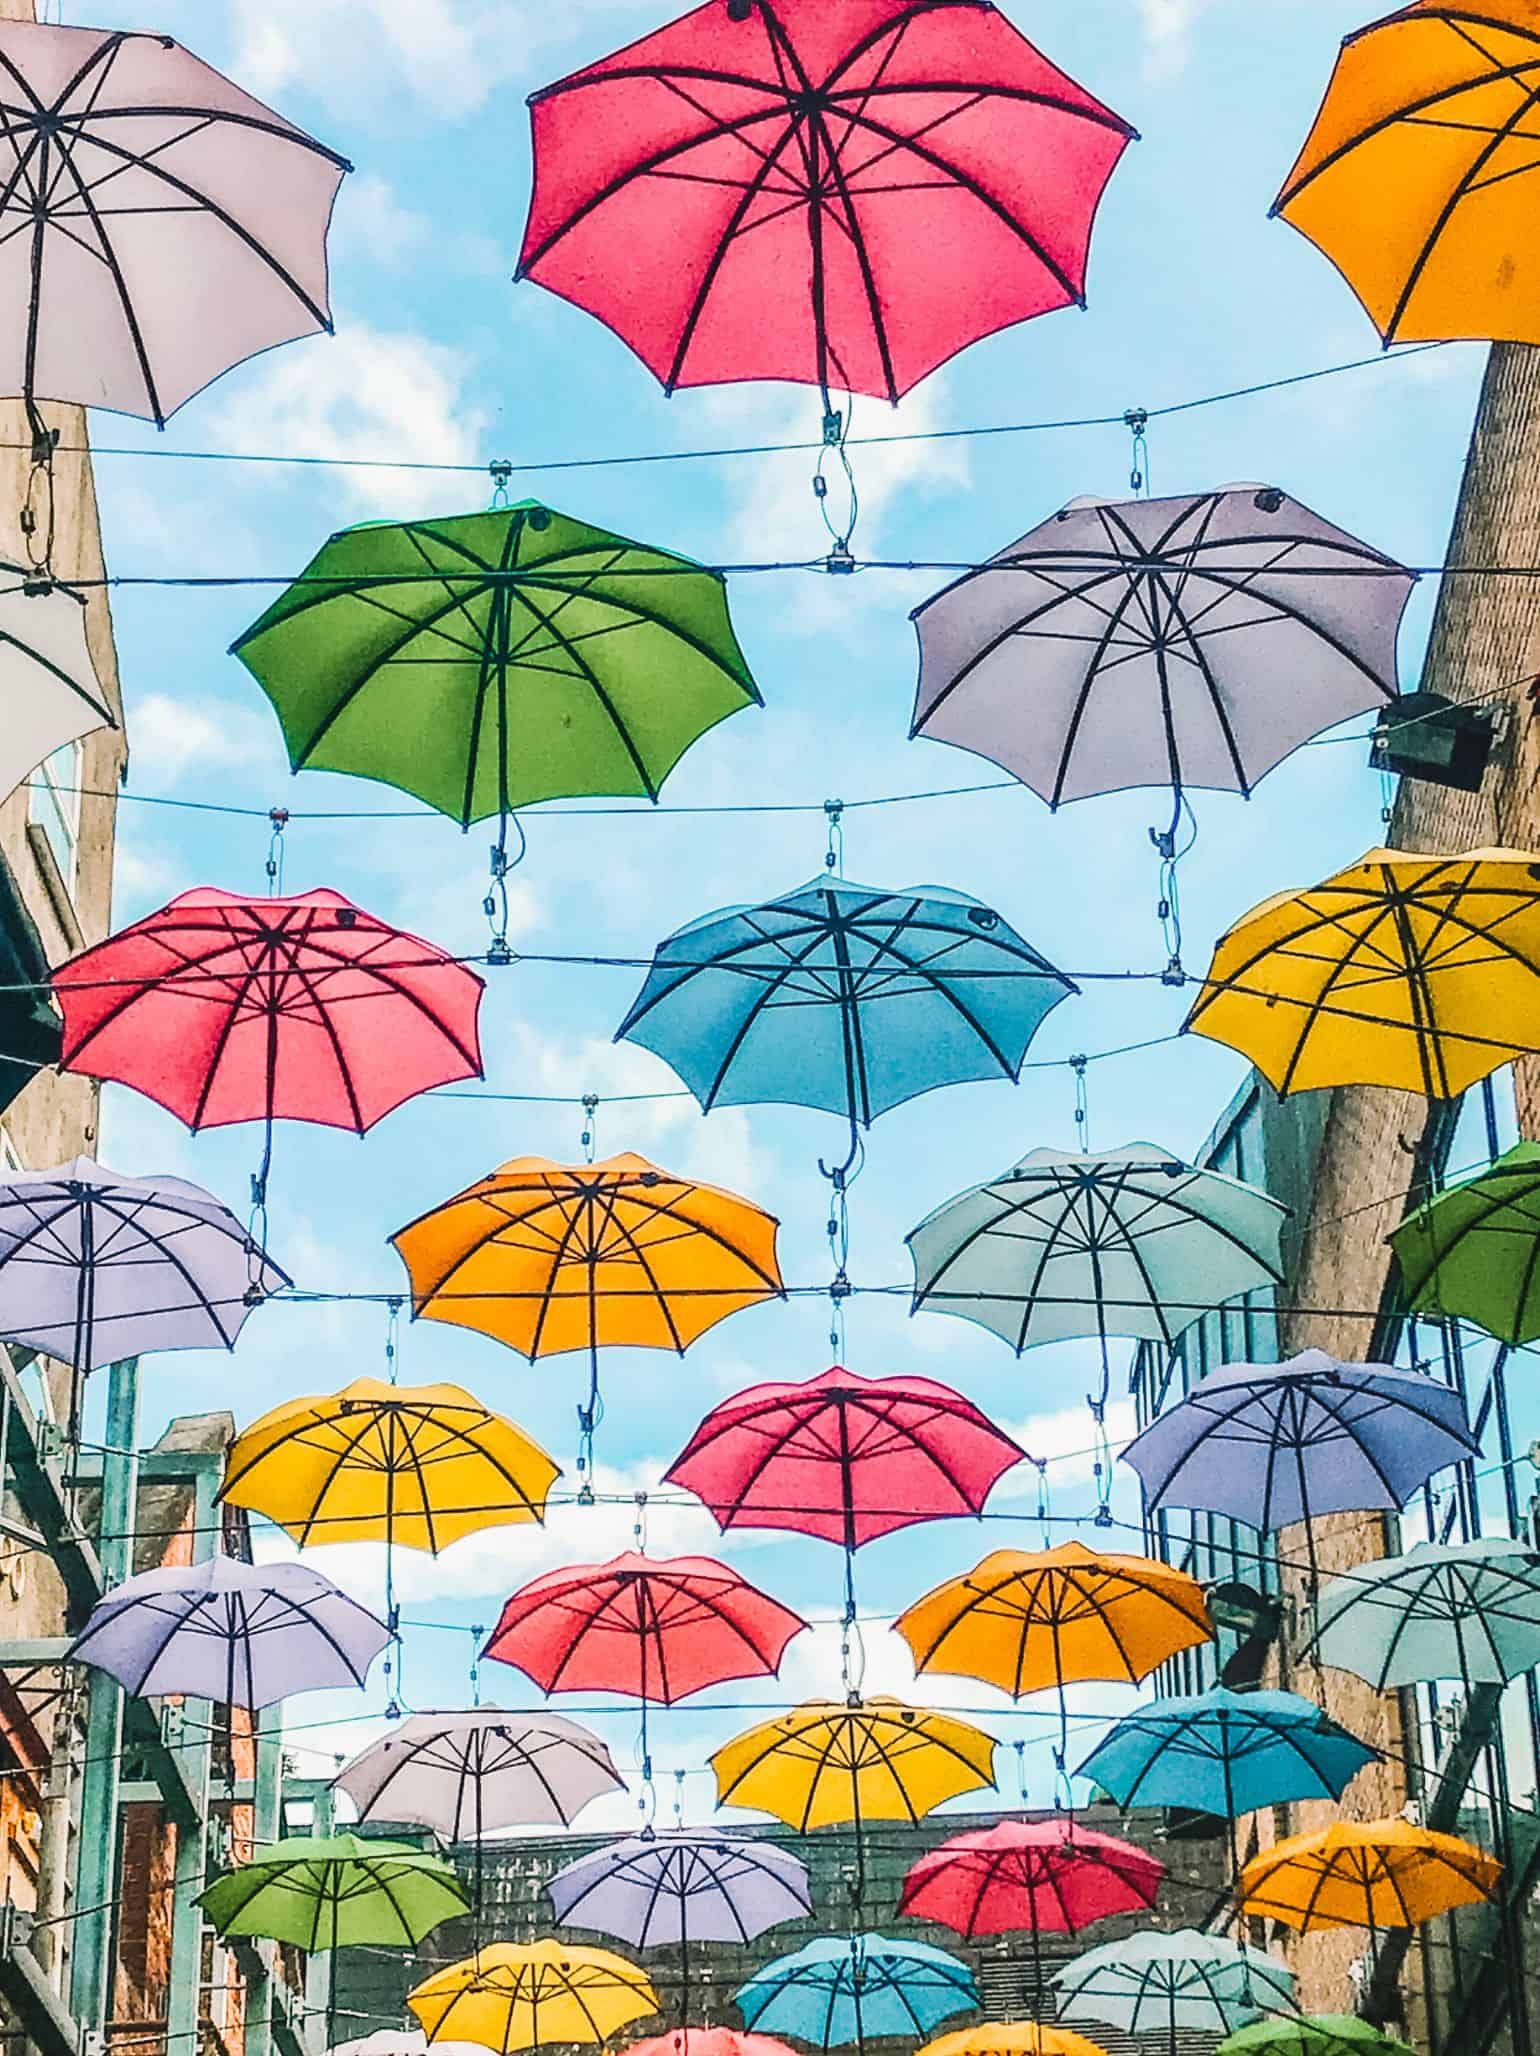 The Anne's Lane umbrella street in Dublin. 